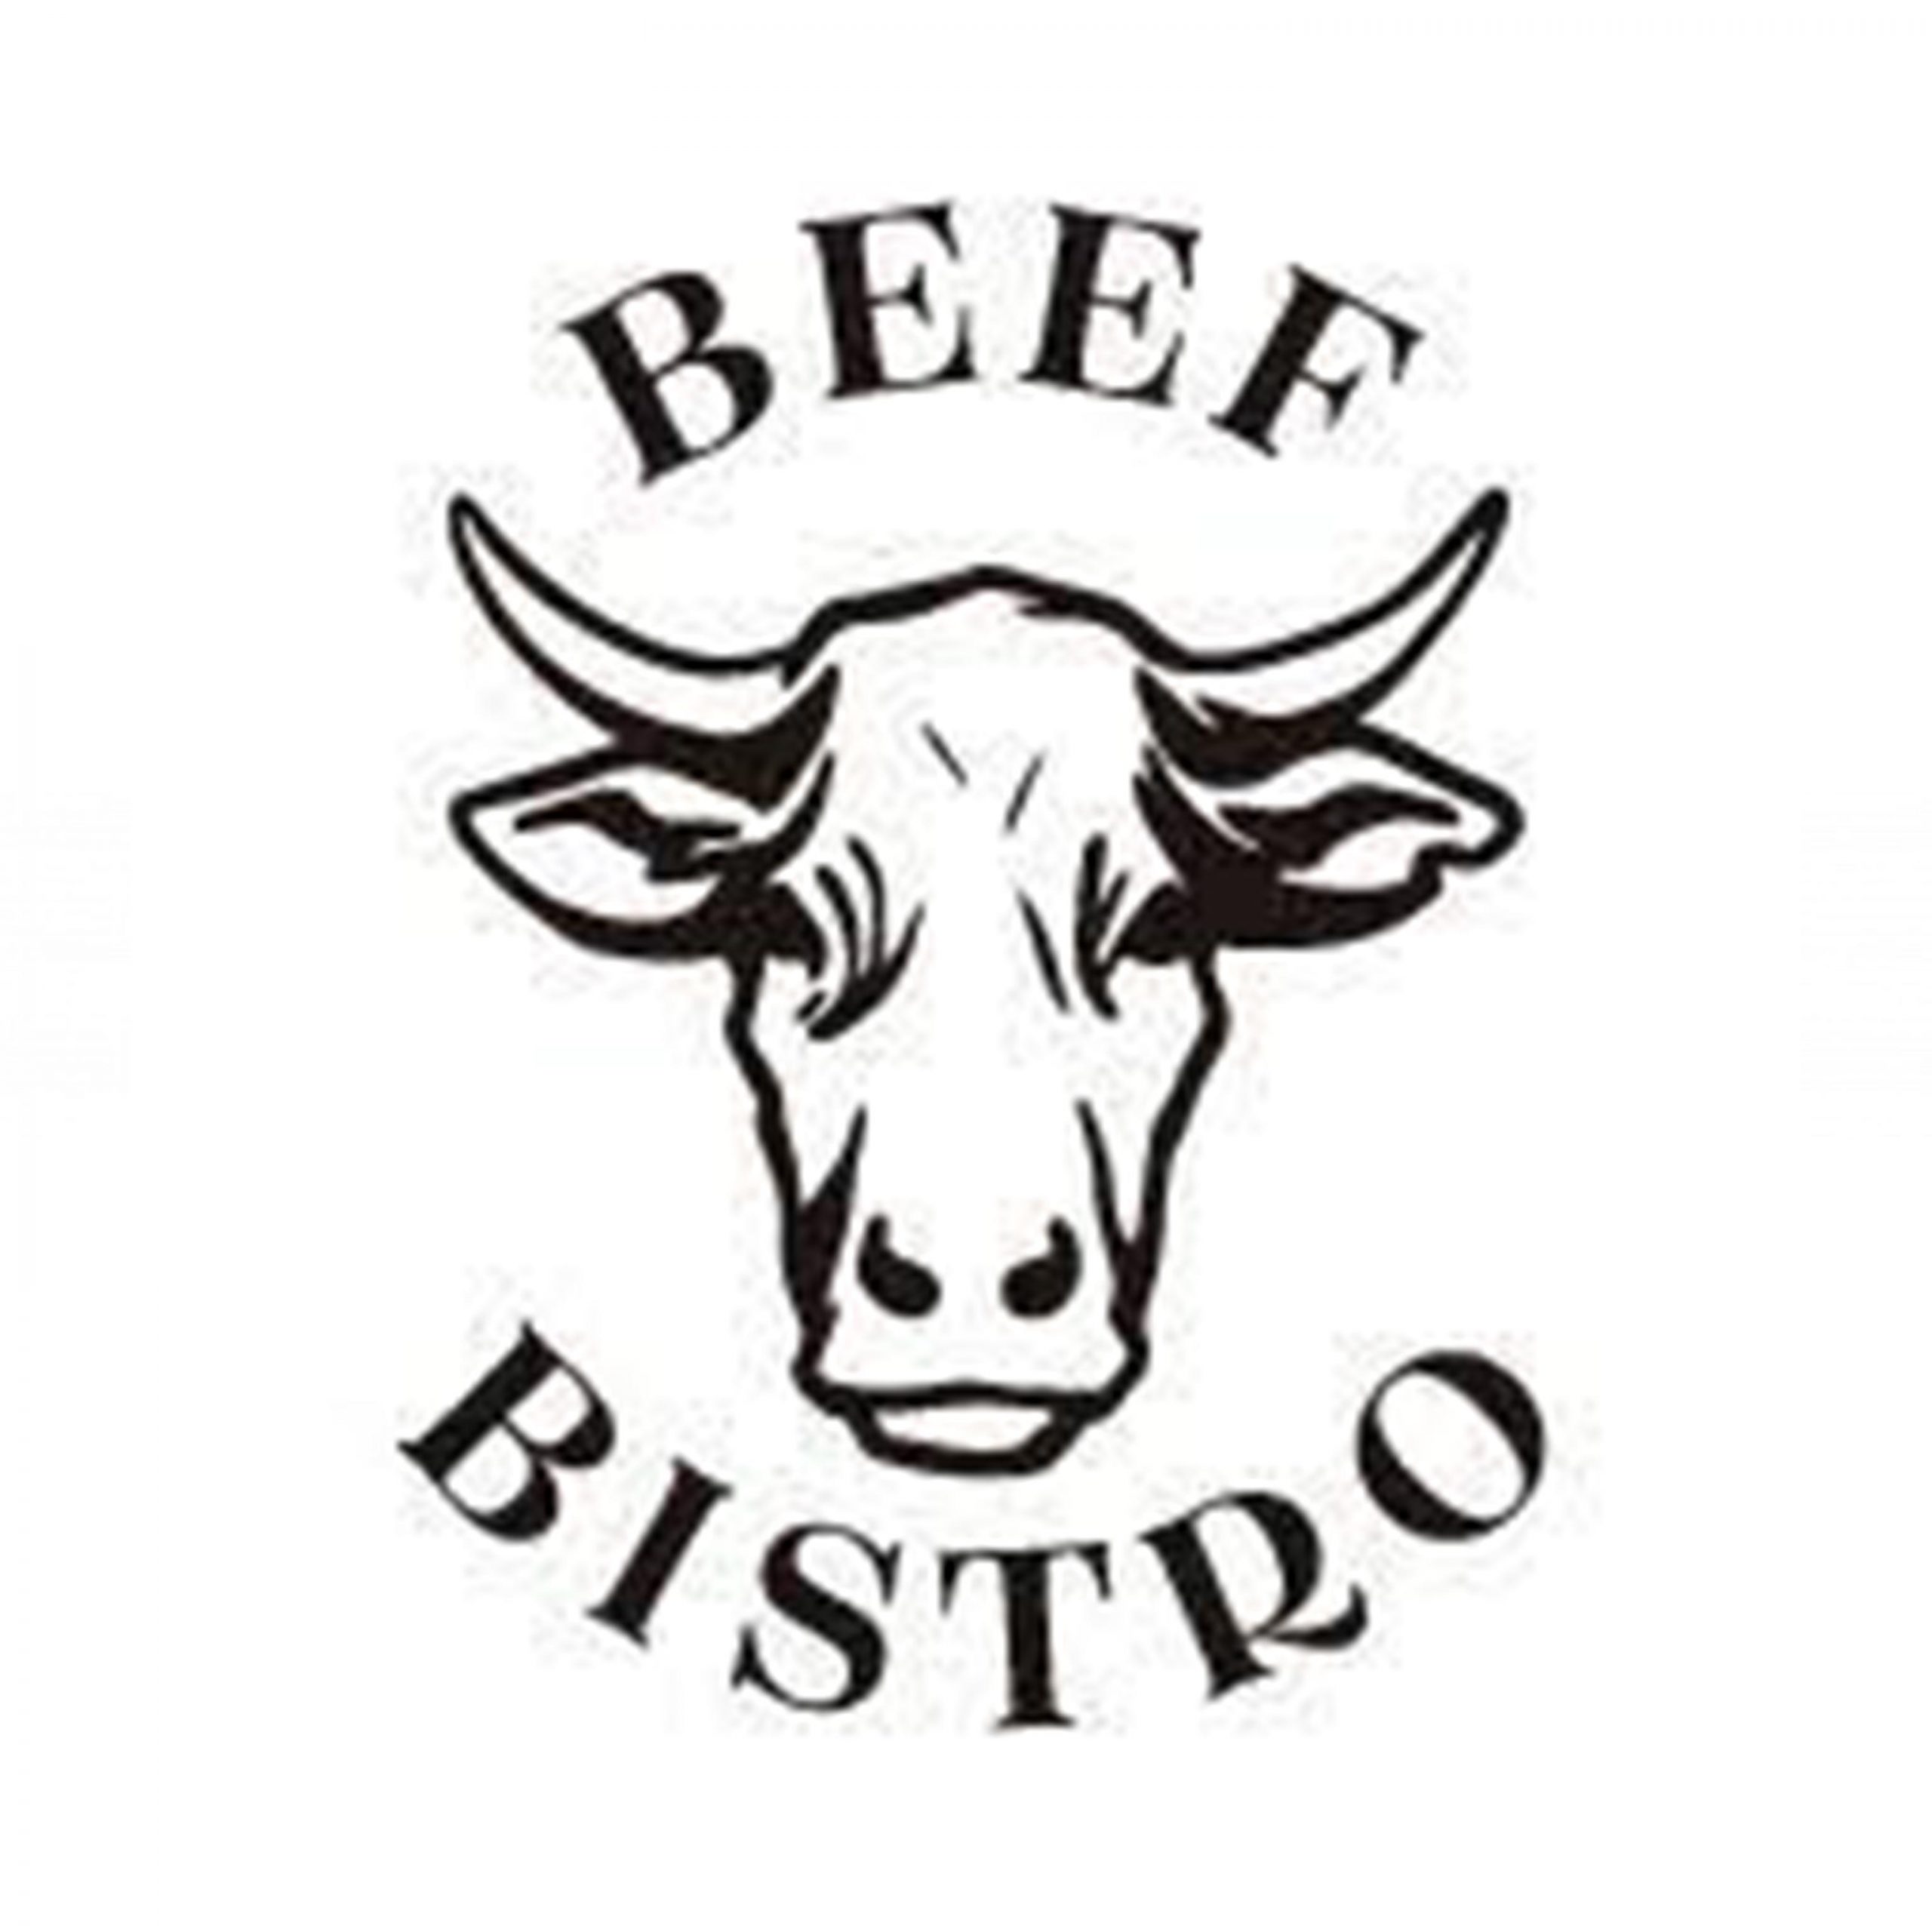 Beef Bistro - Coming Soon in UAE